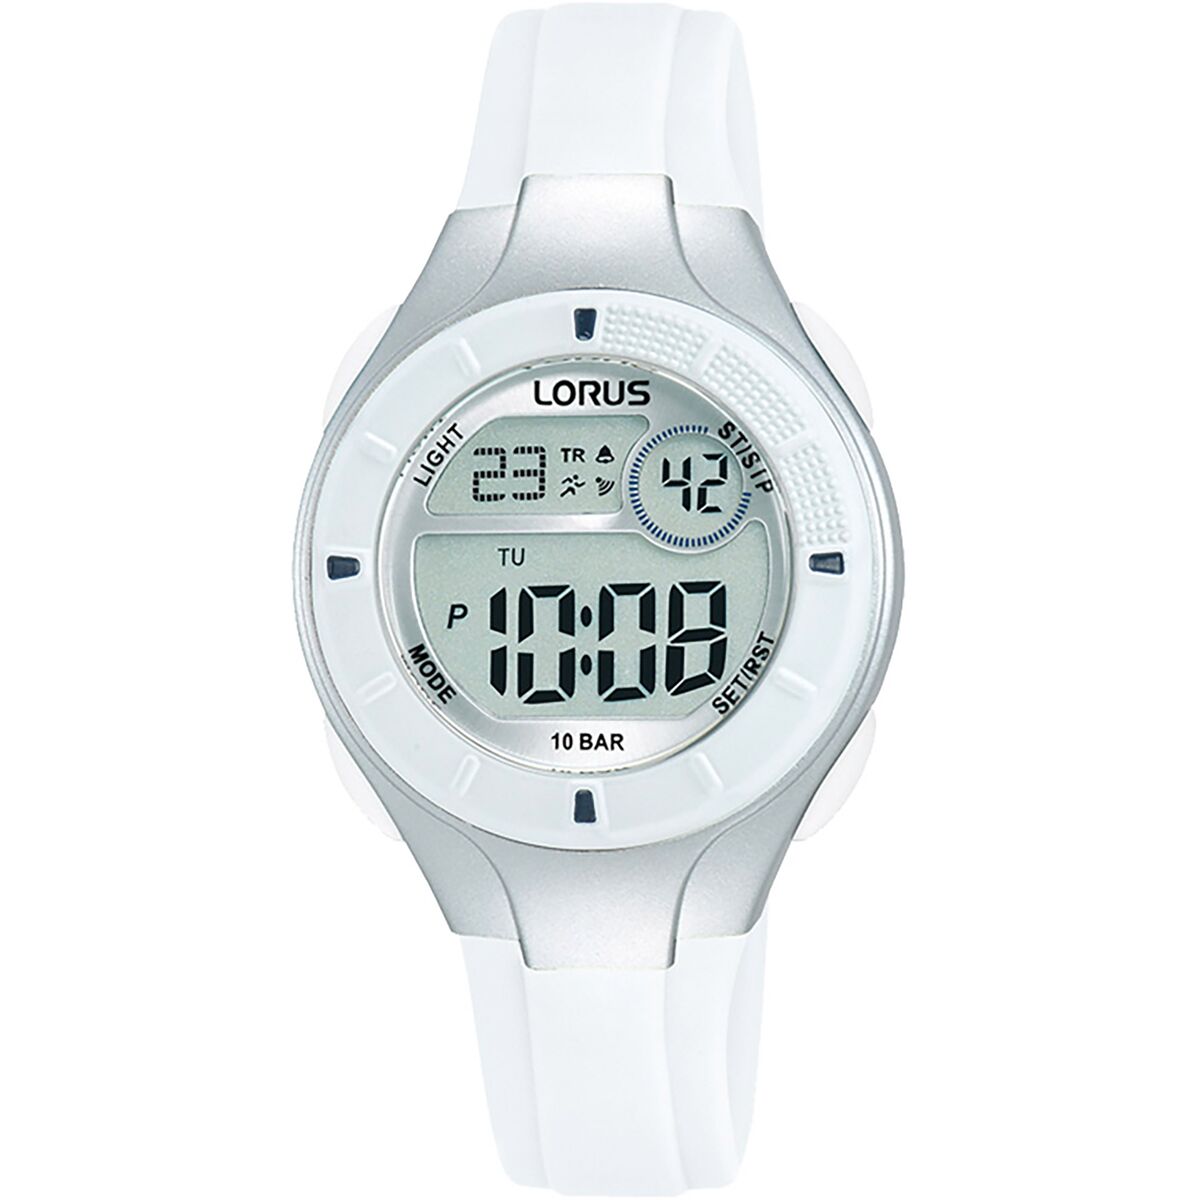 Kaufe Unisex-Uhr Lorus R2349PX9 (Ø 20 mm) bei AWK Flagship um € 55.00